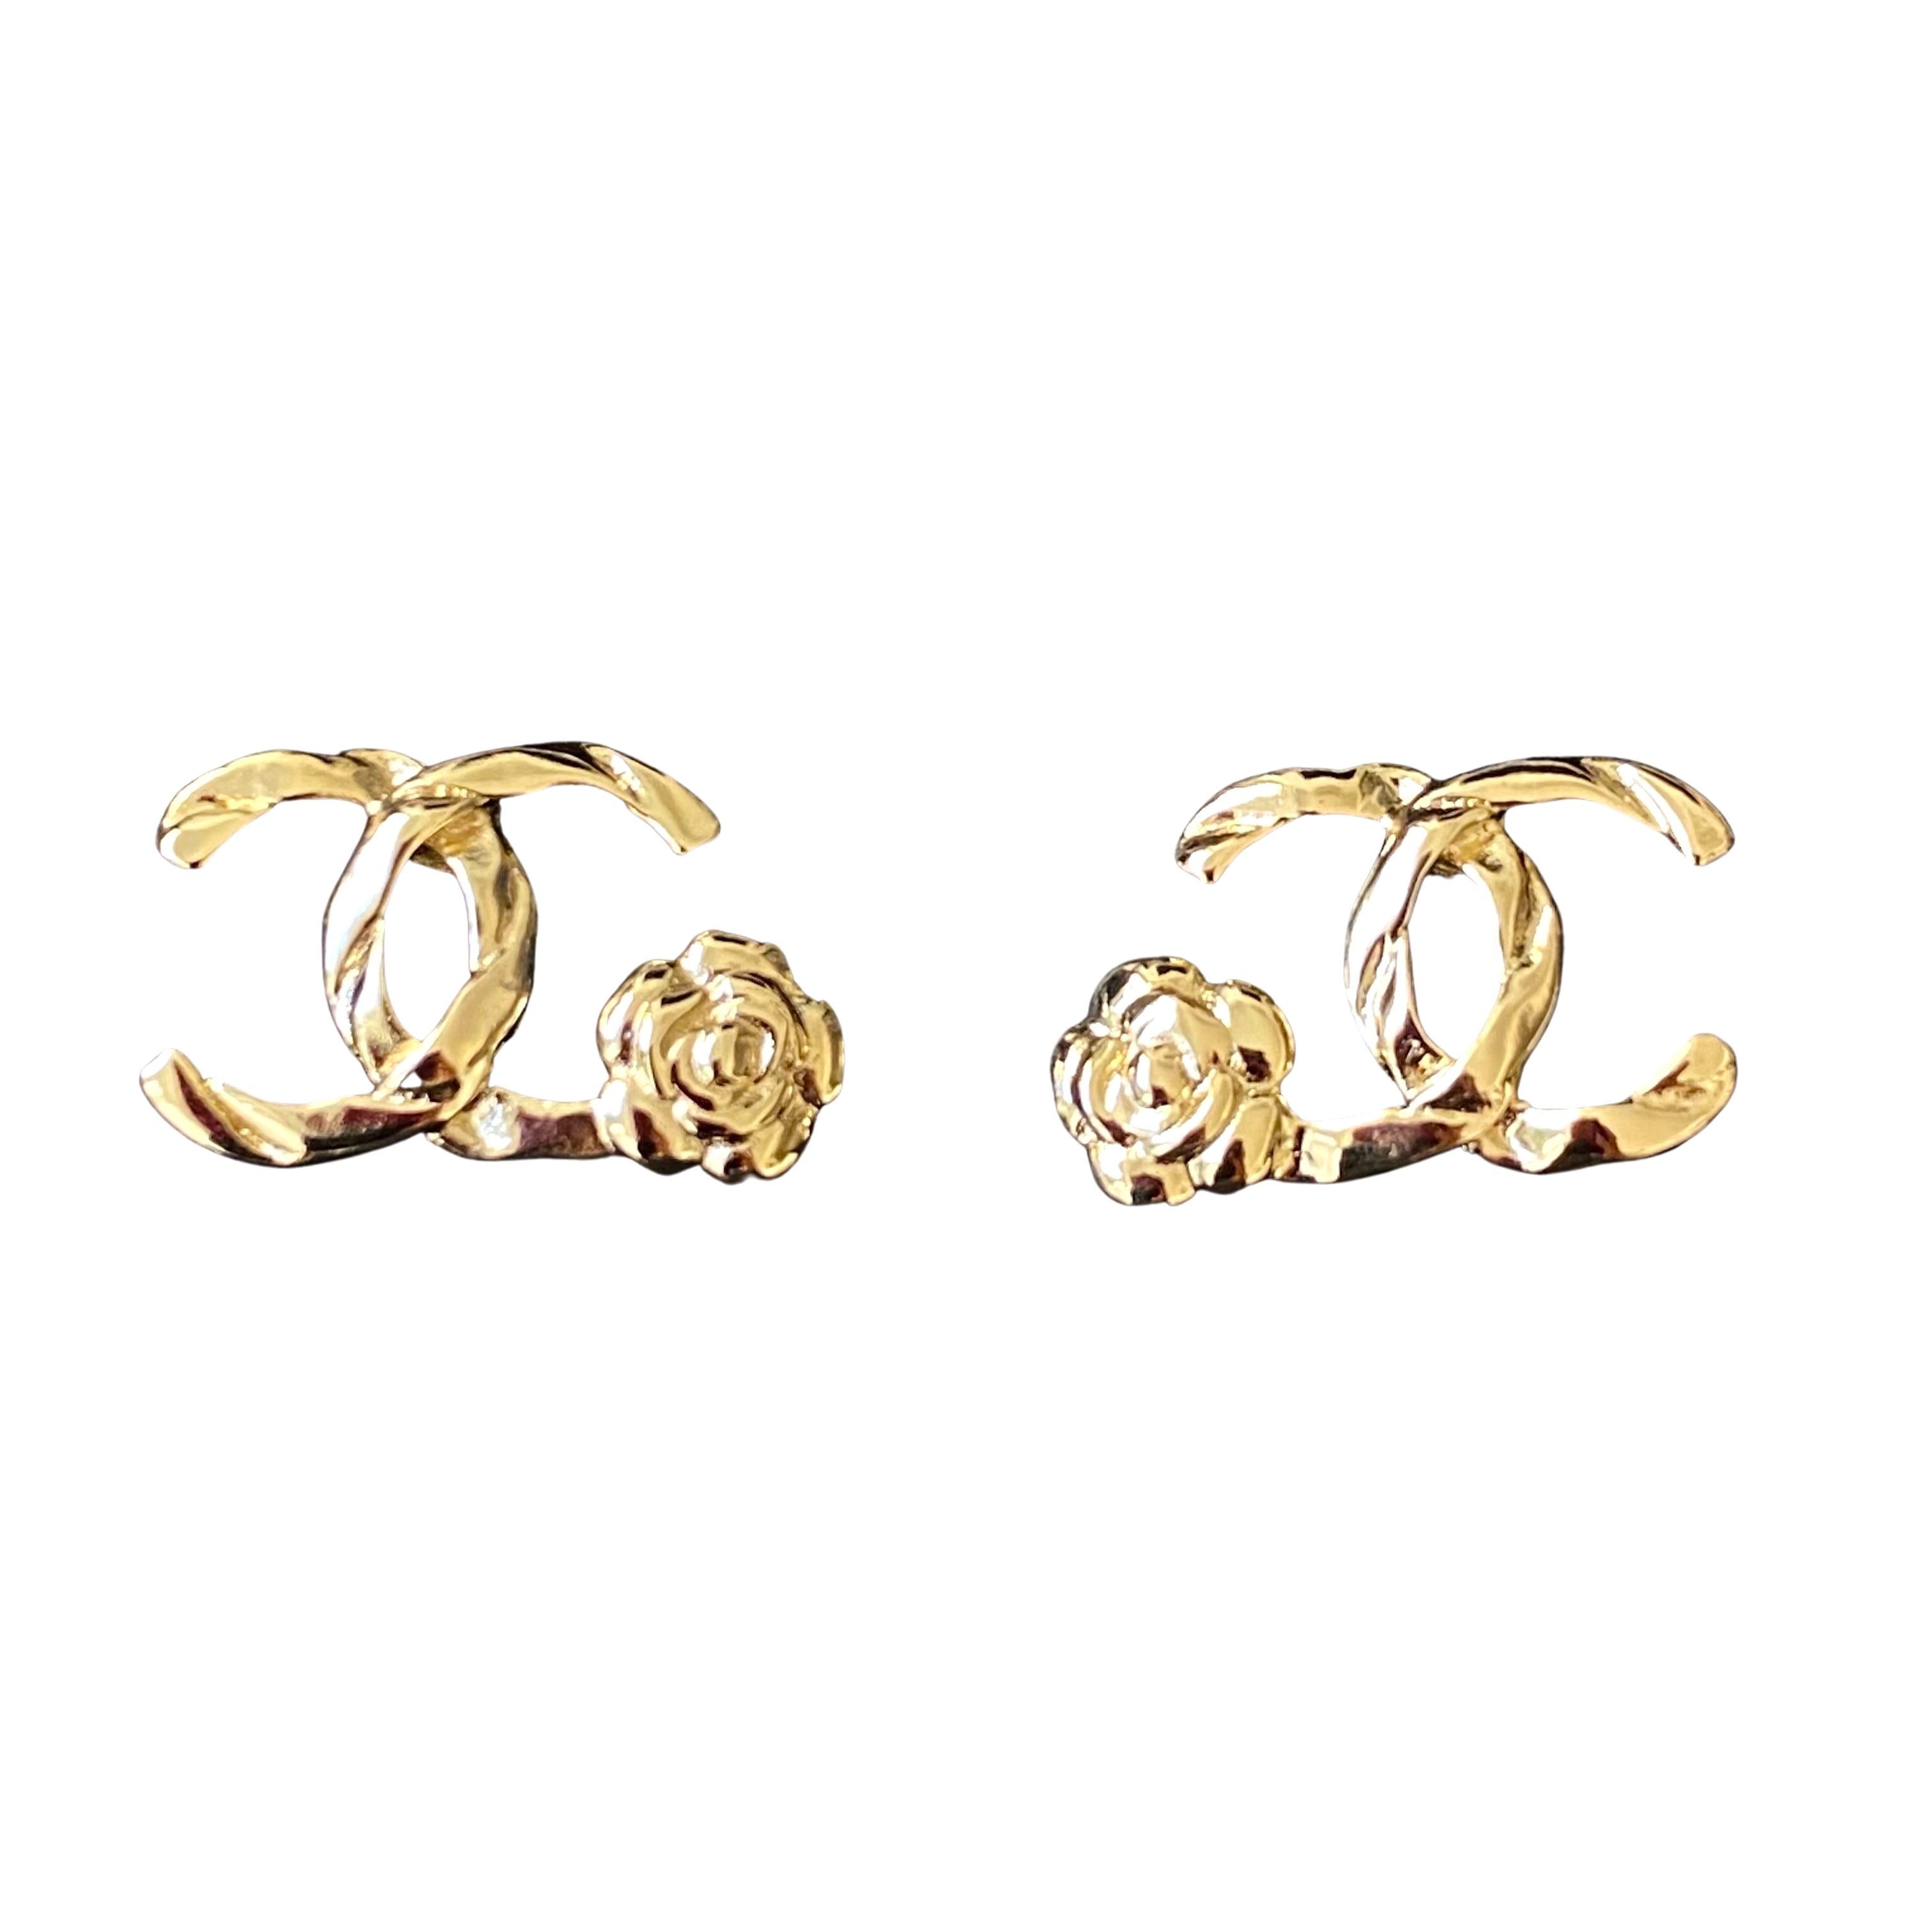 NWT CHANEL CLASSIC CC Logo Gold Crystal Stud Earrings $1,025.00 - PicClick